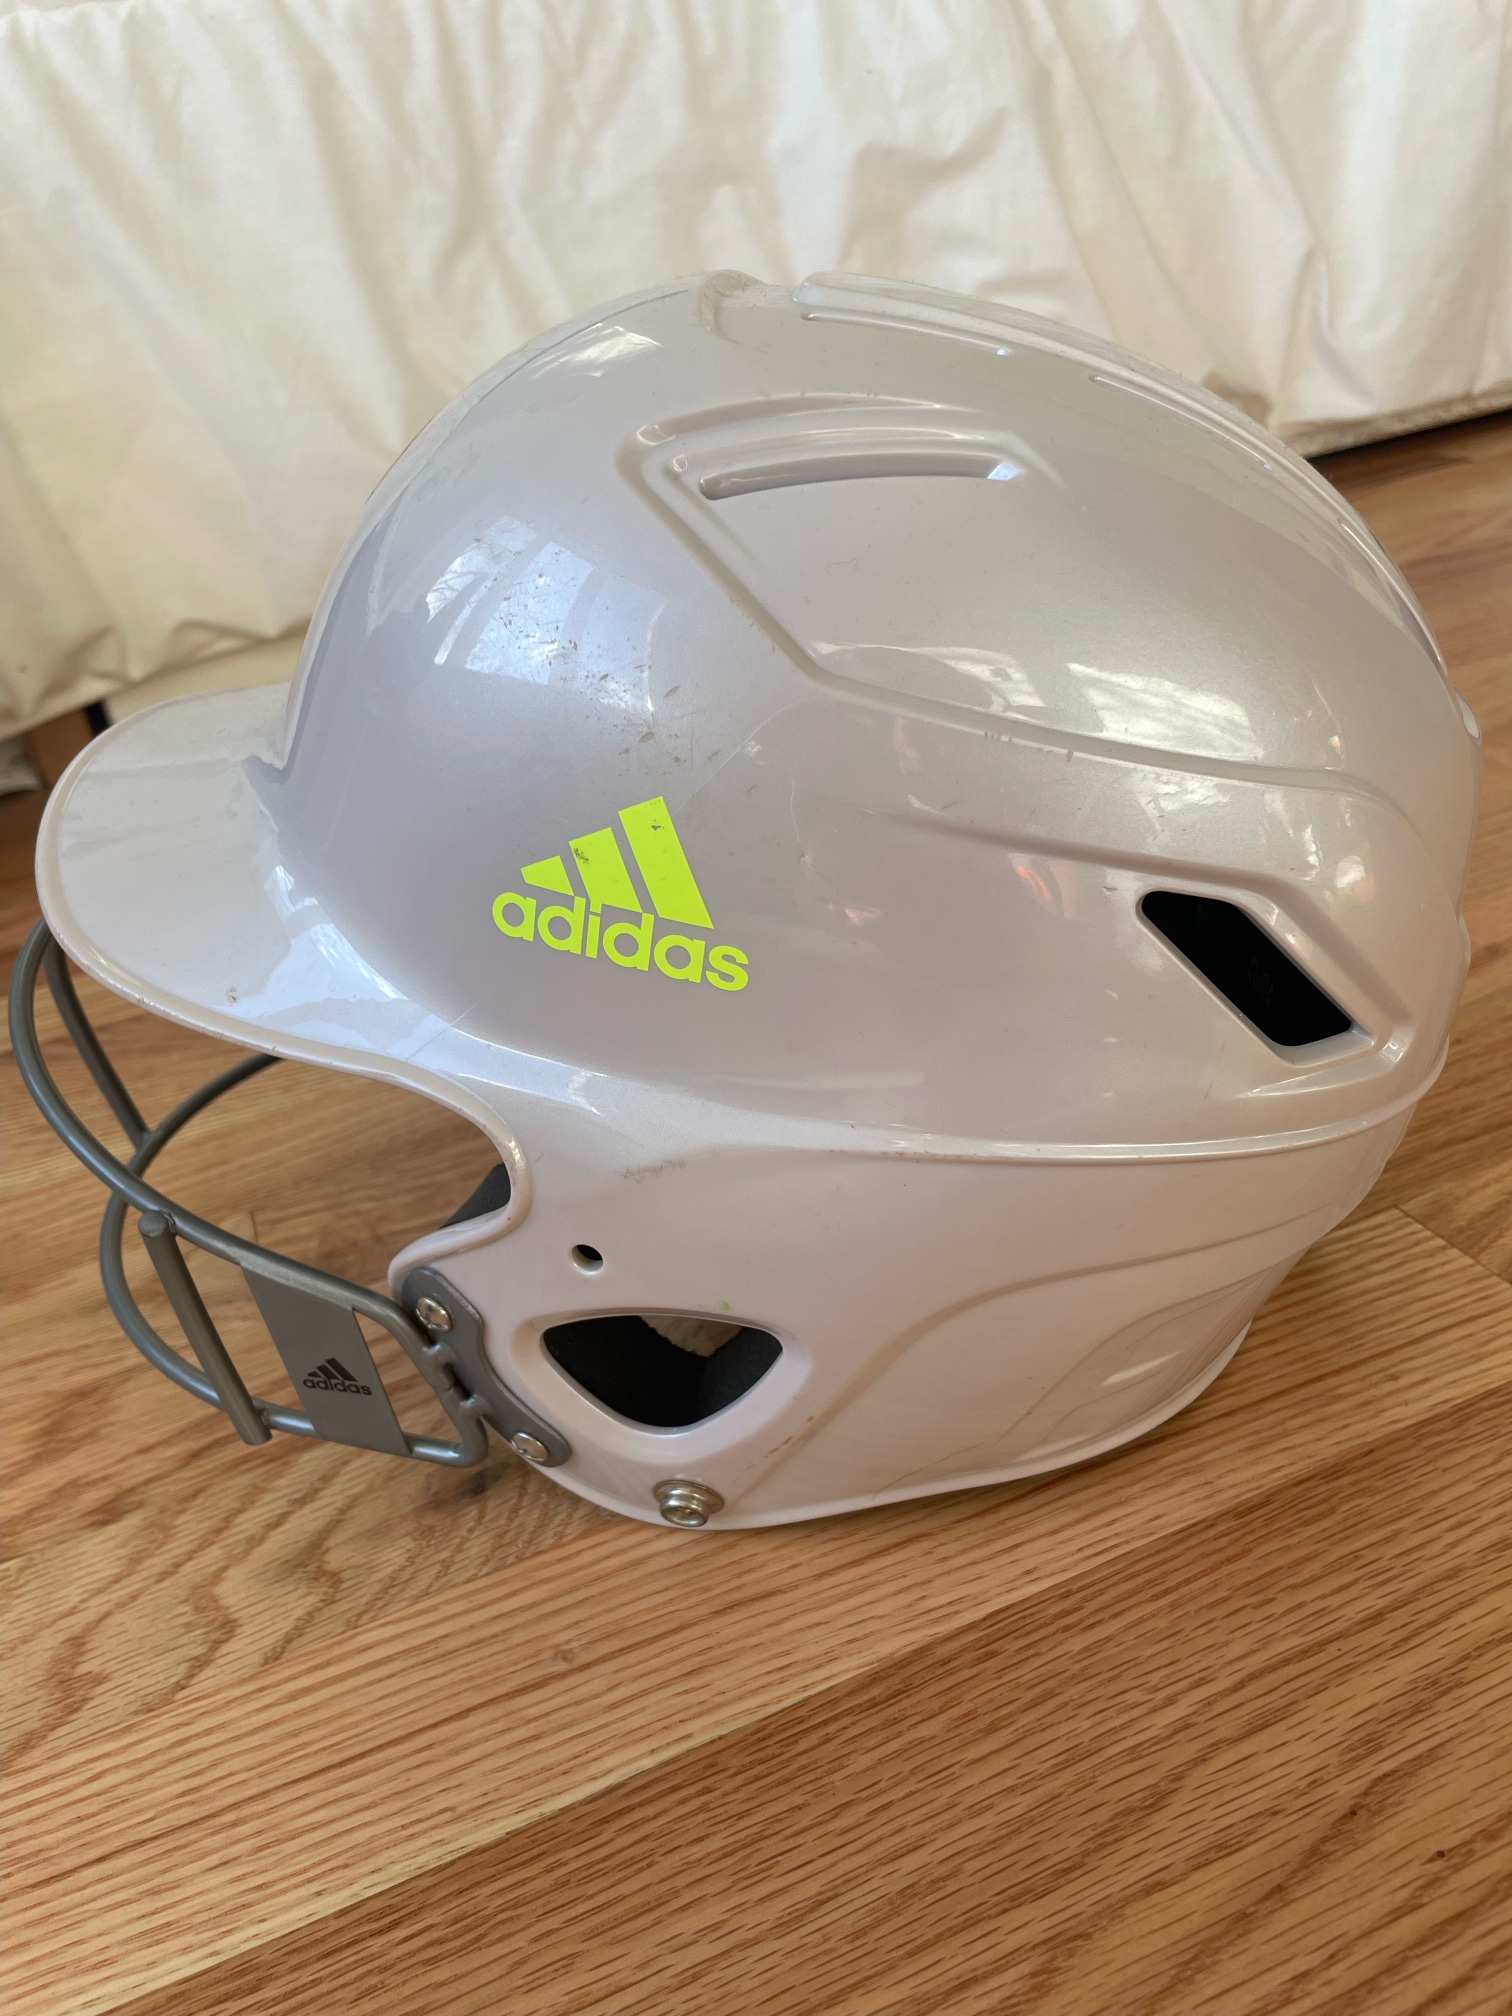 Used One Size Fits All Adidas Batting Helmet